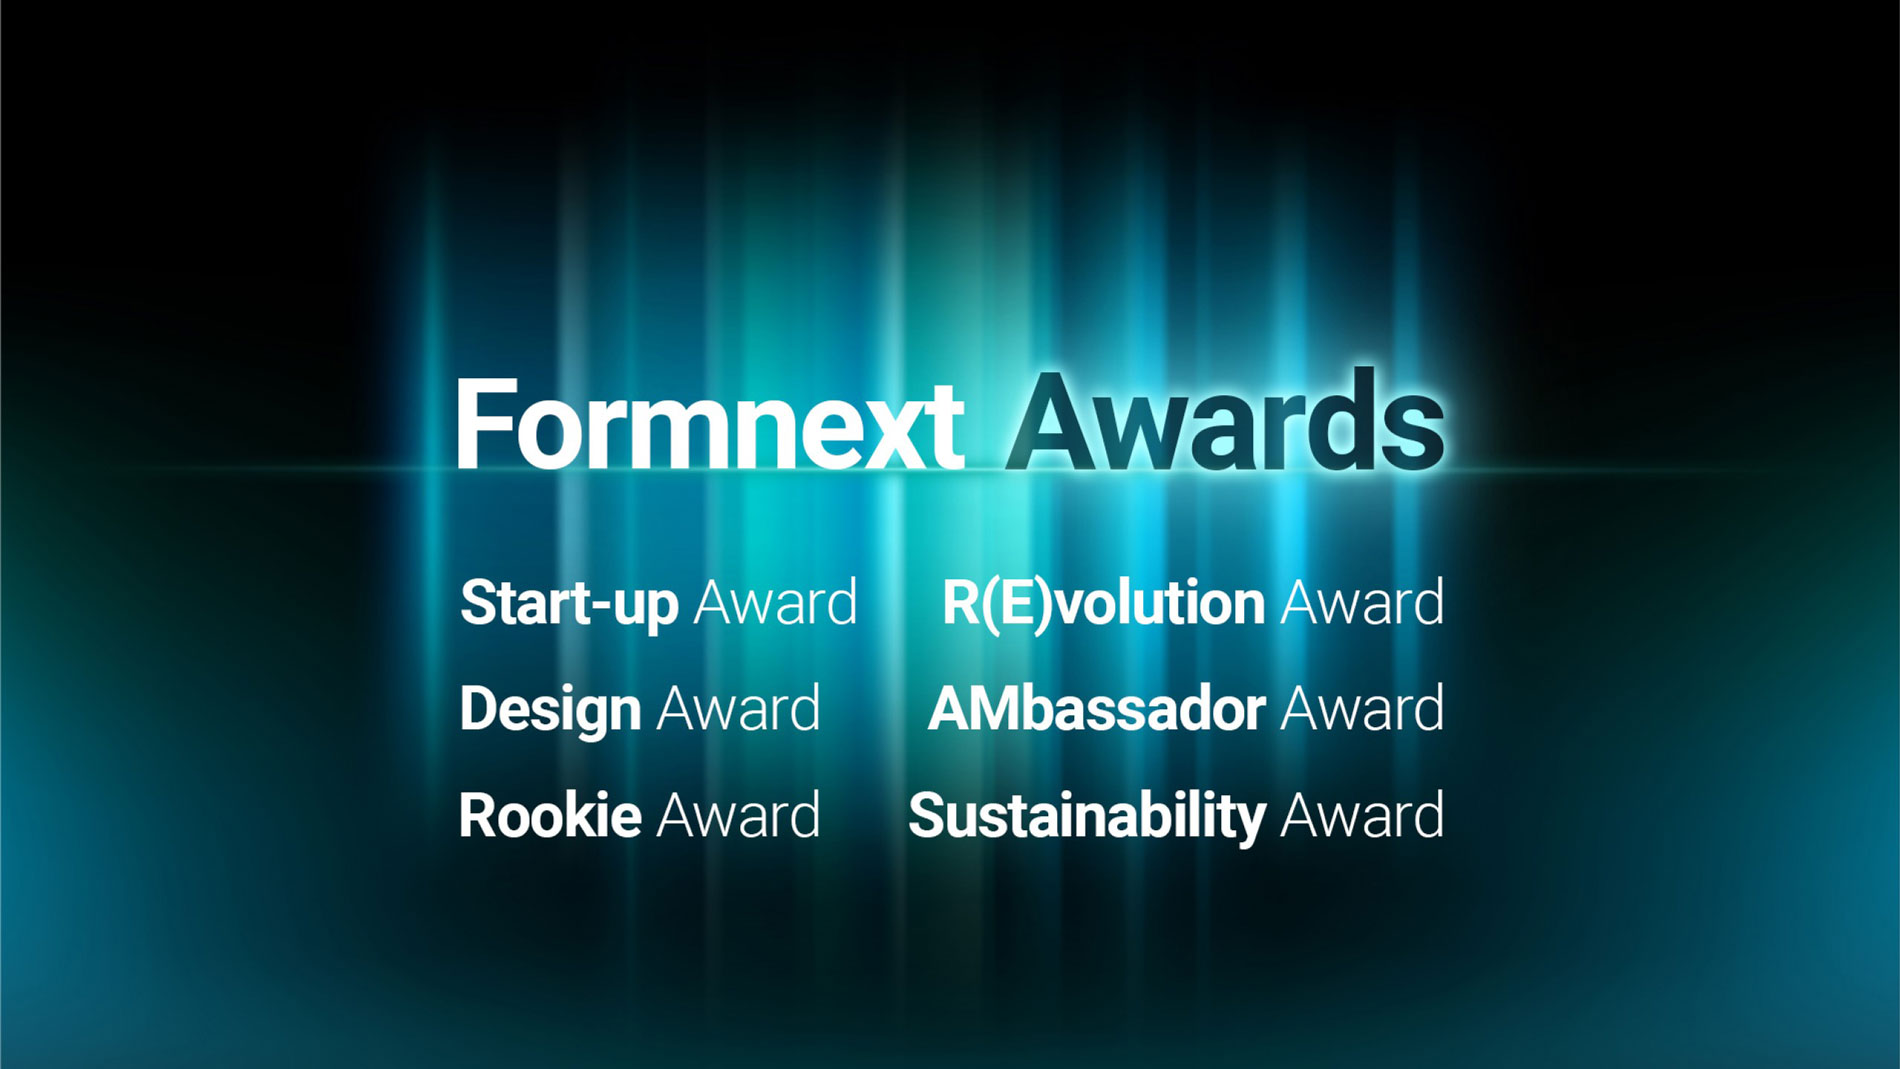 FON24_Award_KV_Newsletter_2560x1440px_WEB